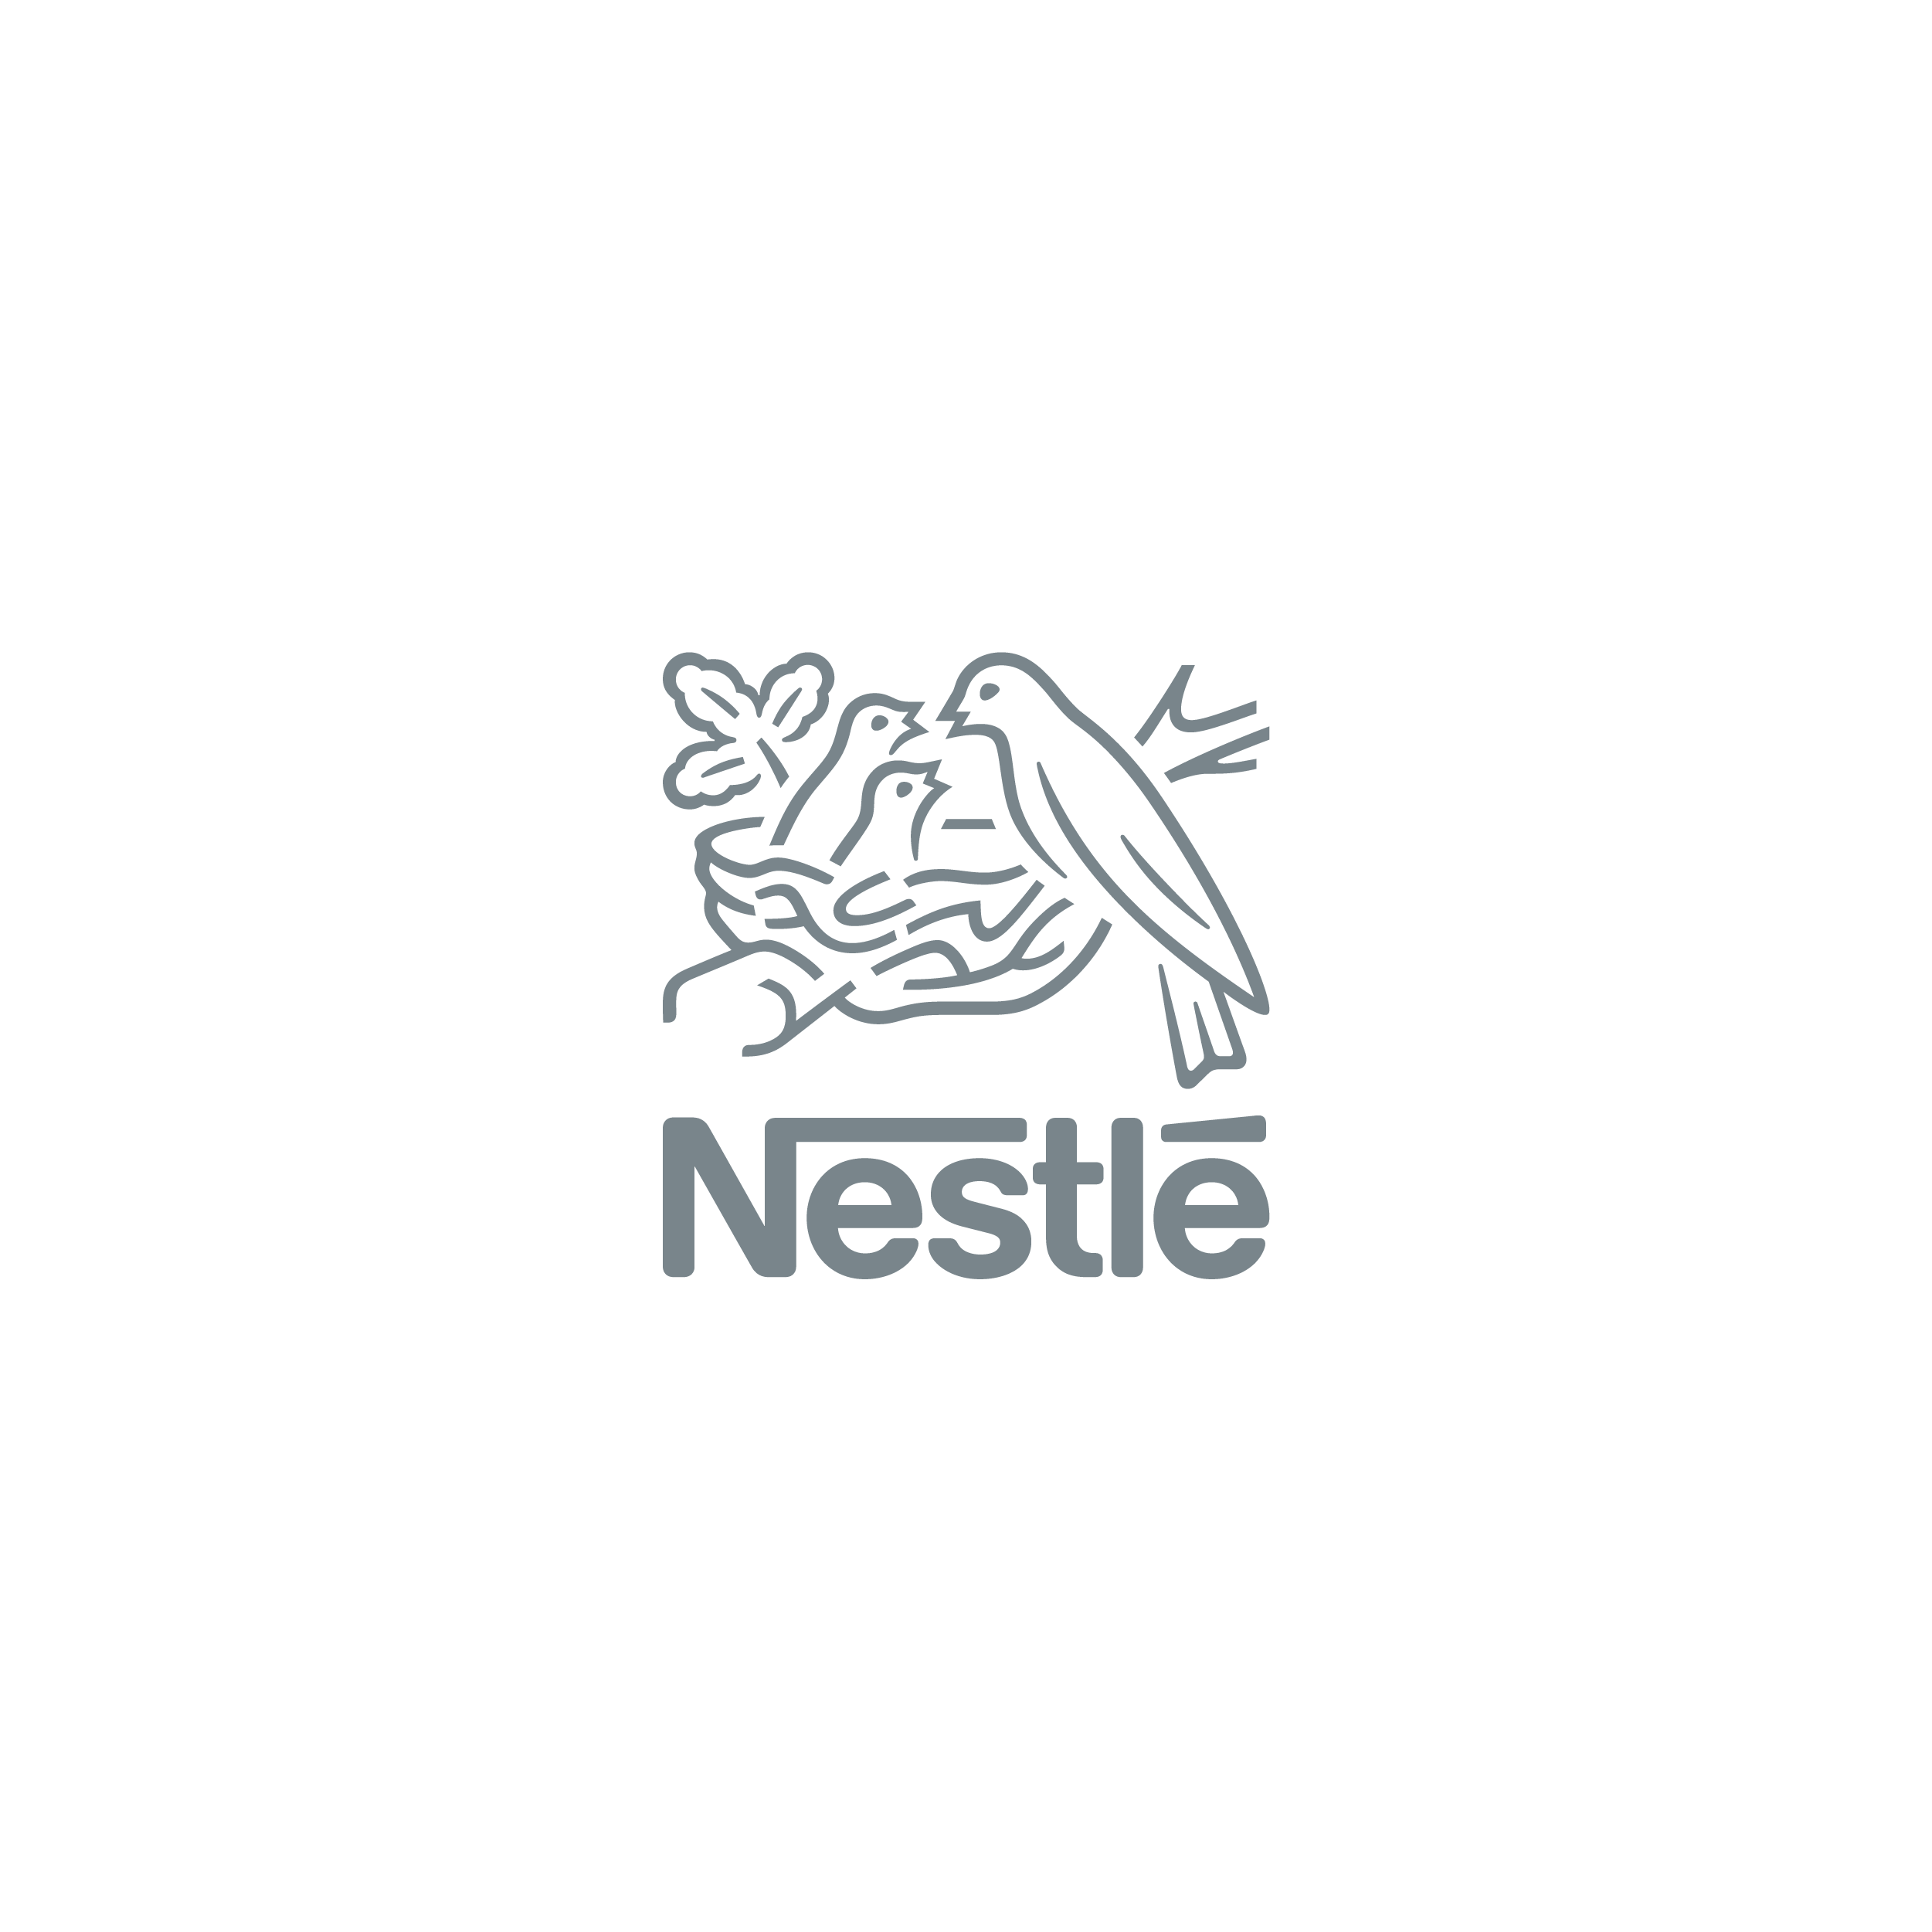 Logos-Nestle